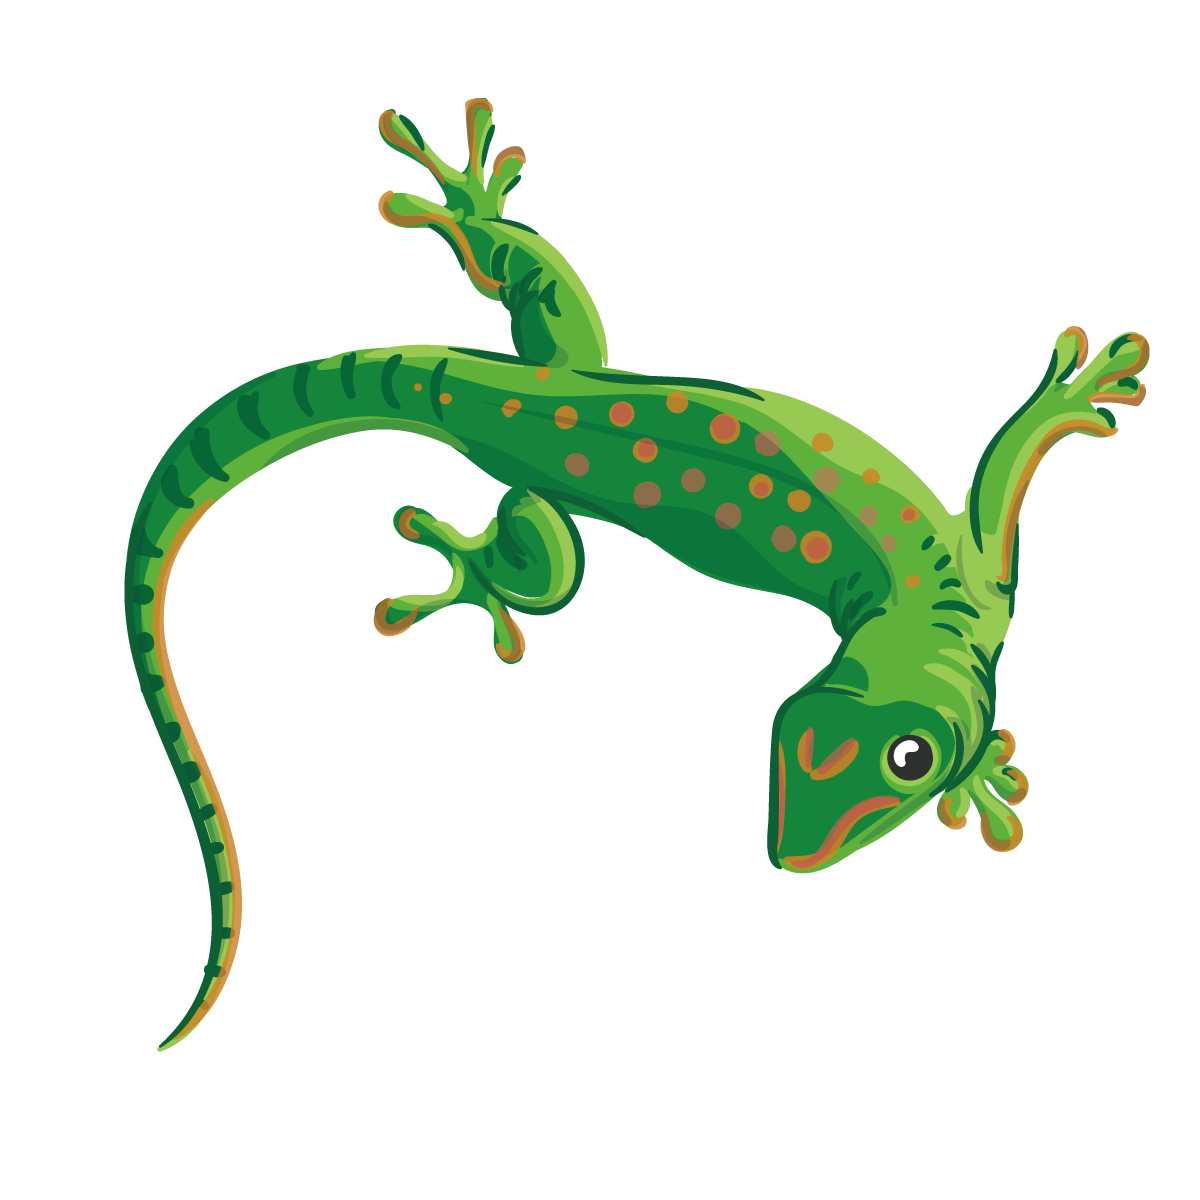 Chameleons euclidean vector illustration. Lizard clipart reptile amphibian